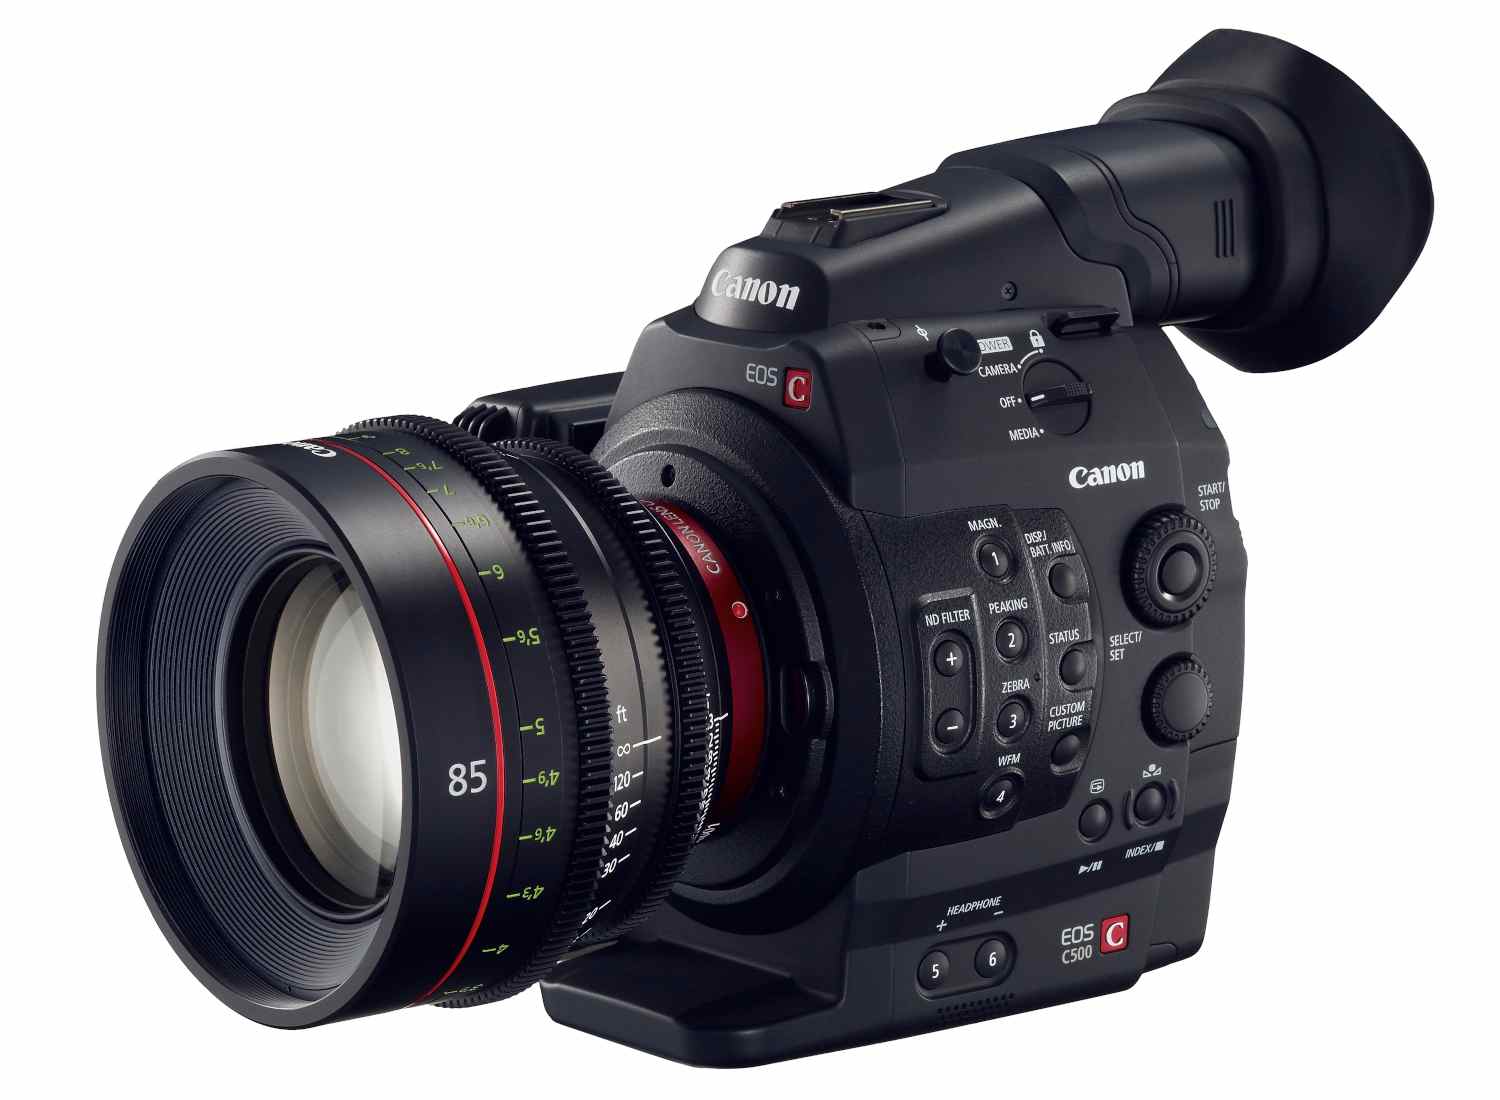  Canon  XF Notebook Canon  EOS C500  4K camcorder launches